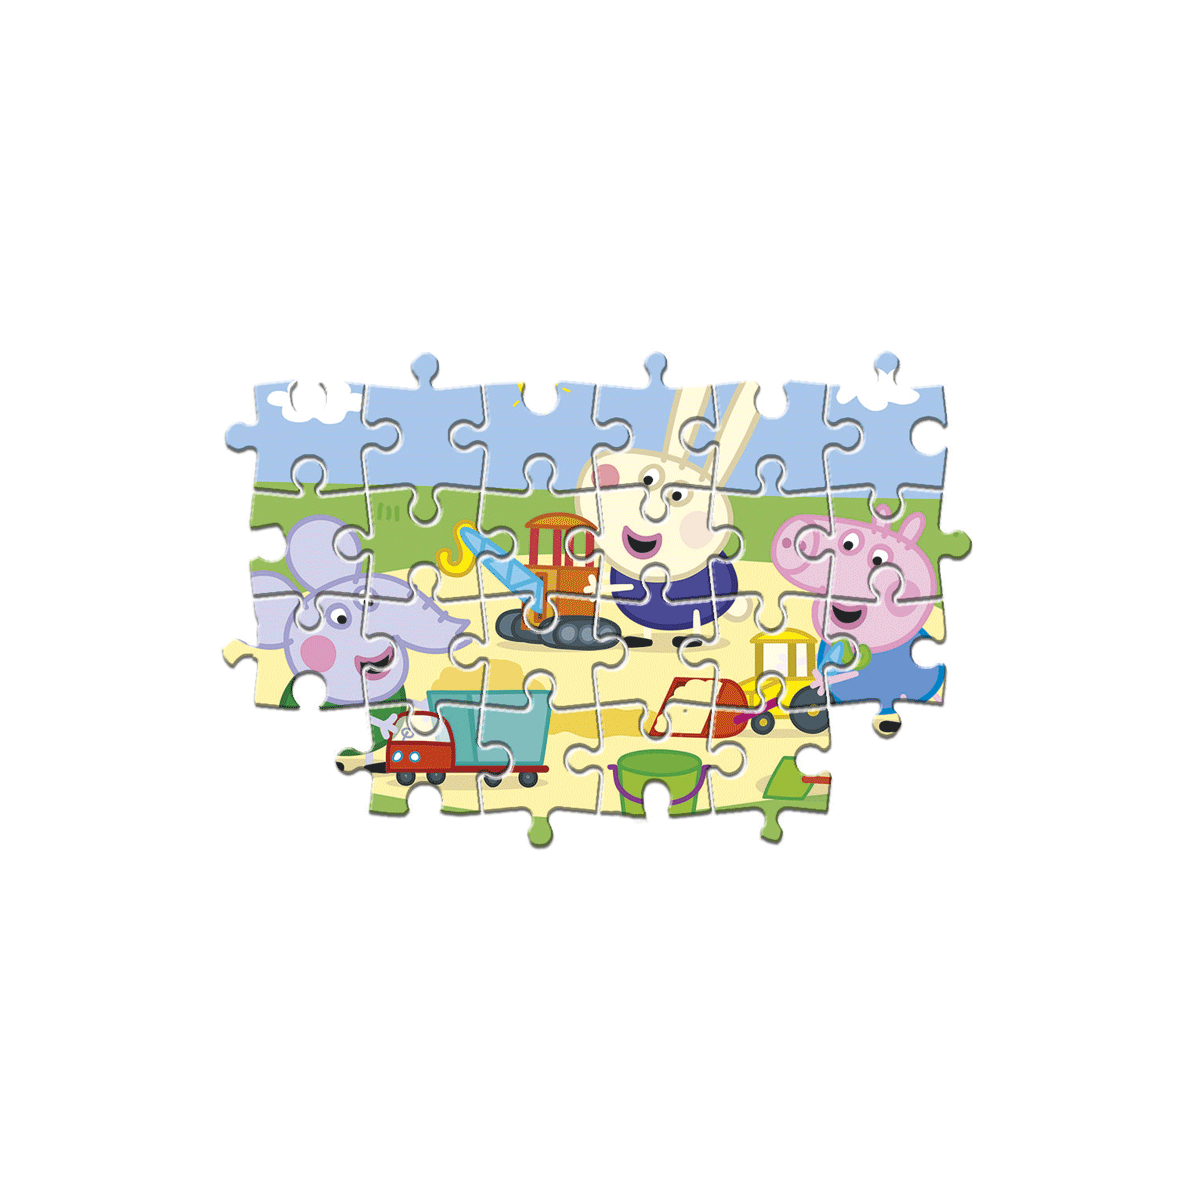 Clementoni supercolor puzzle - peppa pig - 3x48 pezzi, puzzle bambini 5 anni - CLEMENTONI